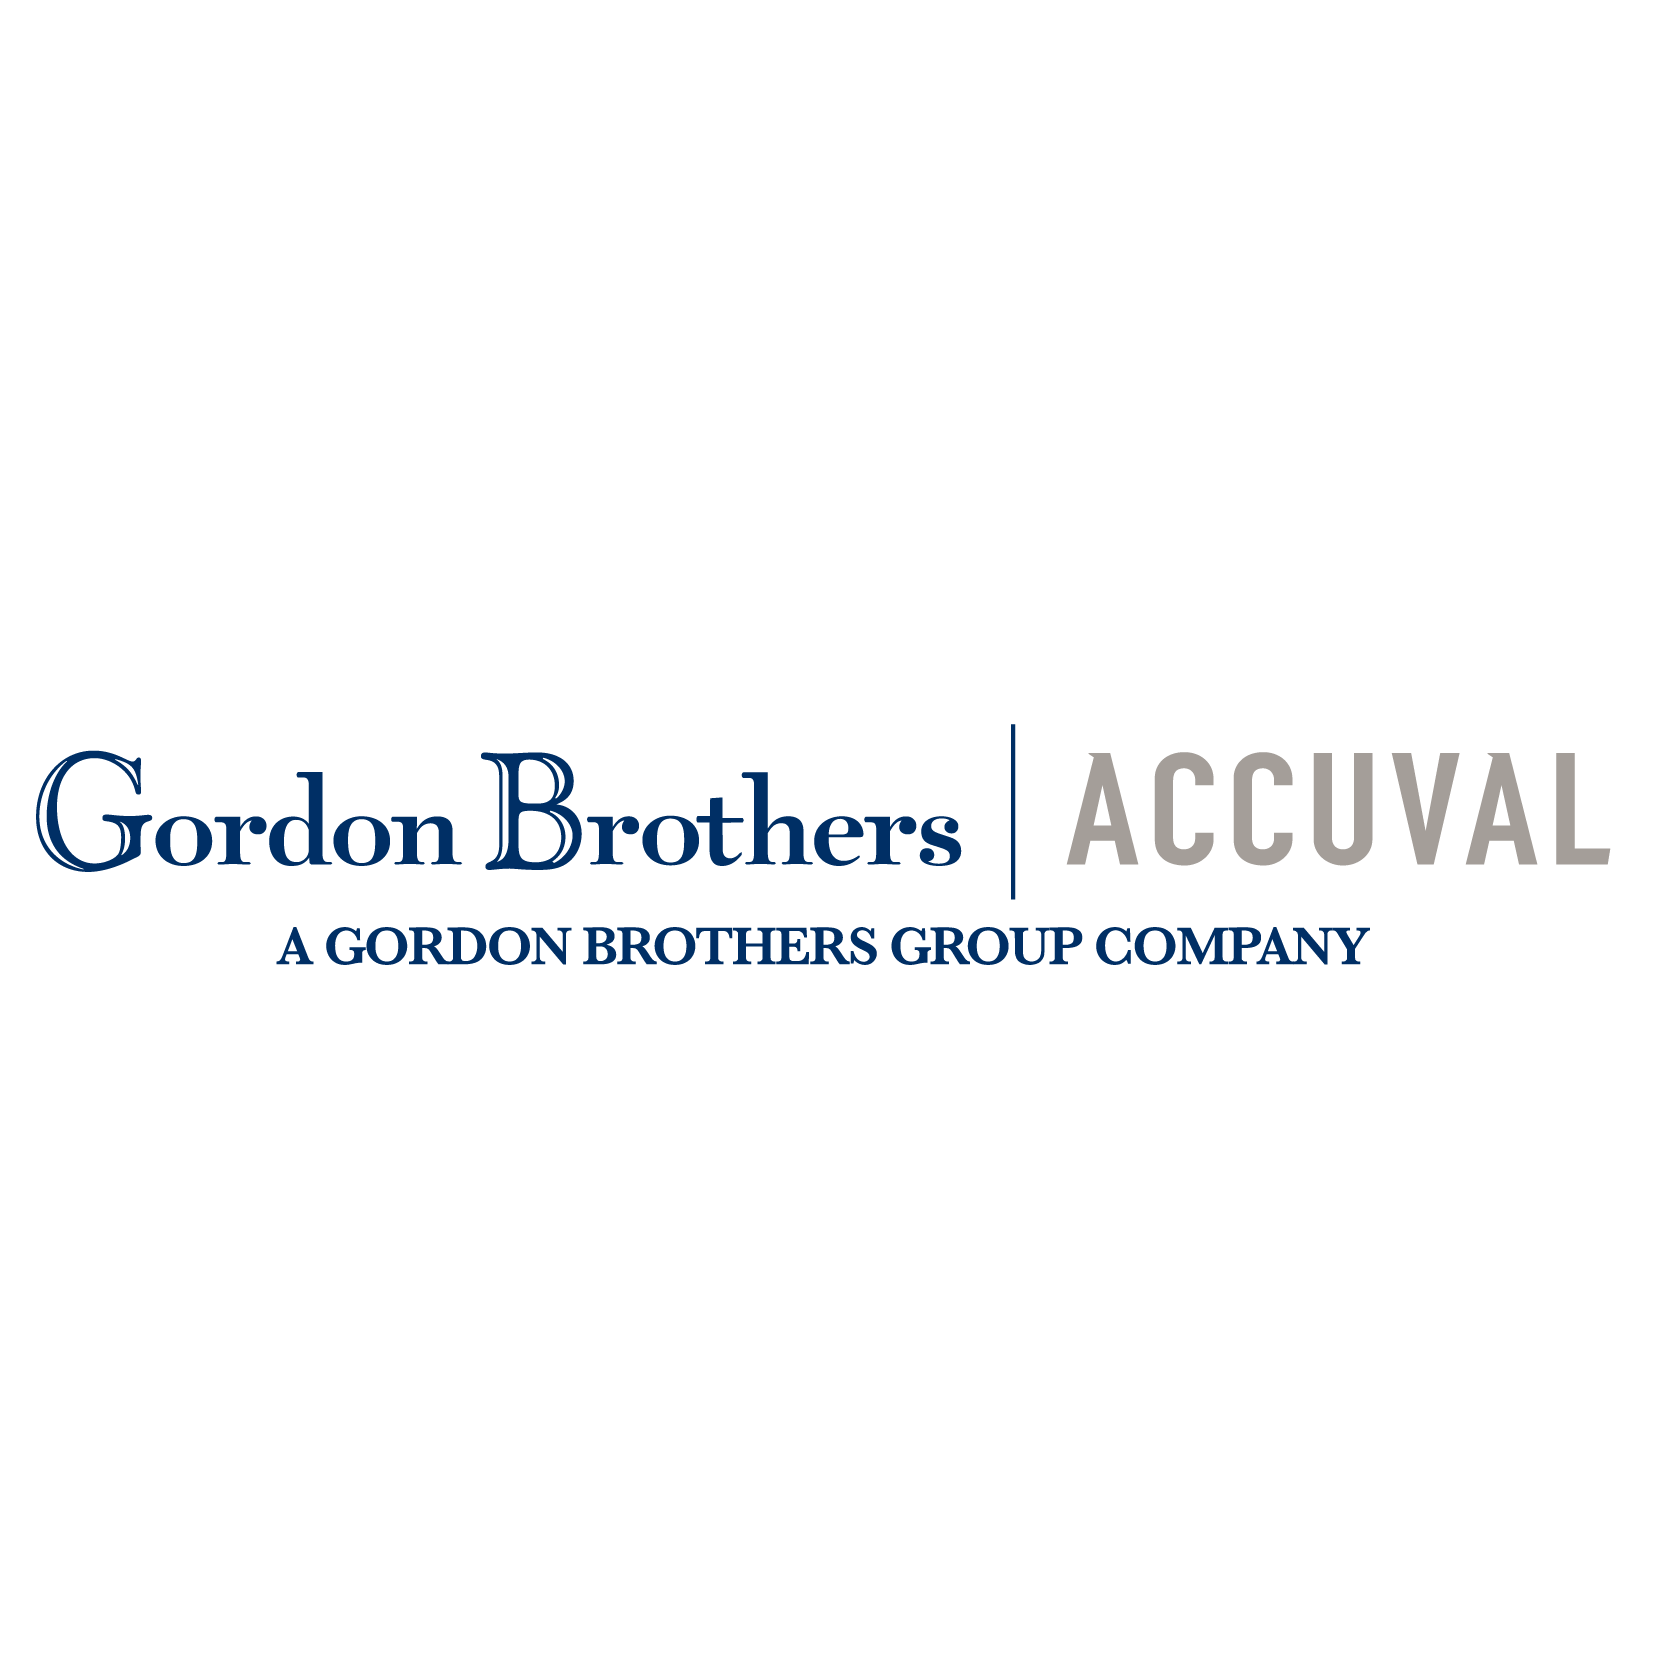 Gordon Brothers-AccuVal Logo